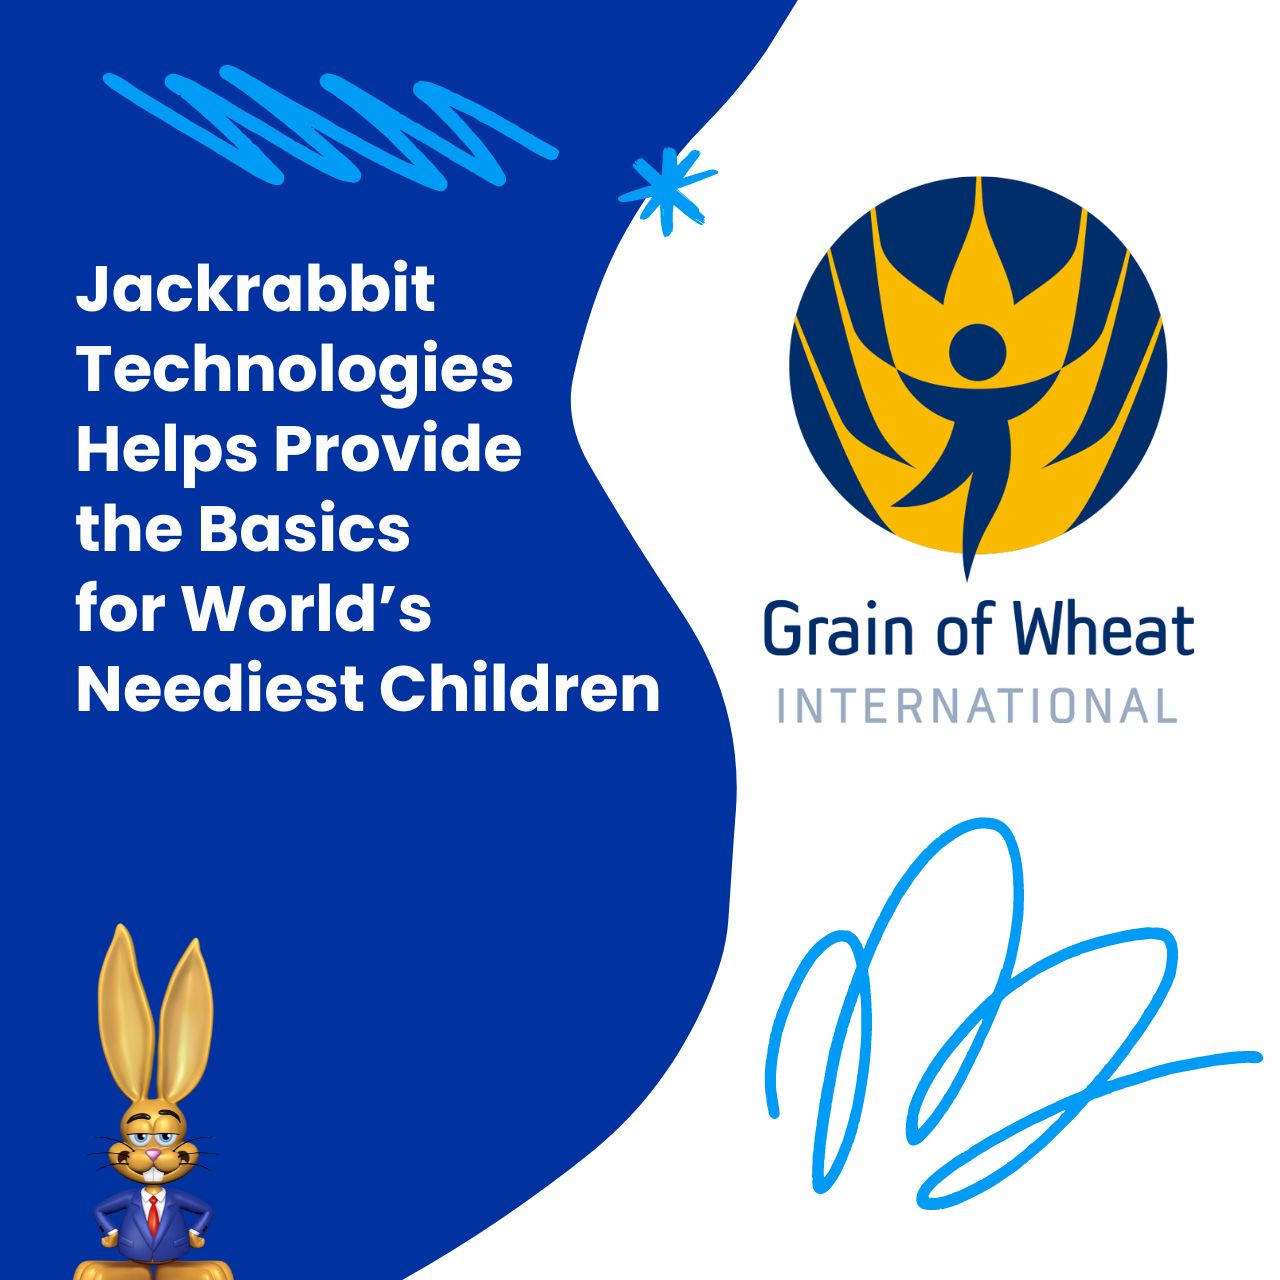 jackrabbit provides children with needs